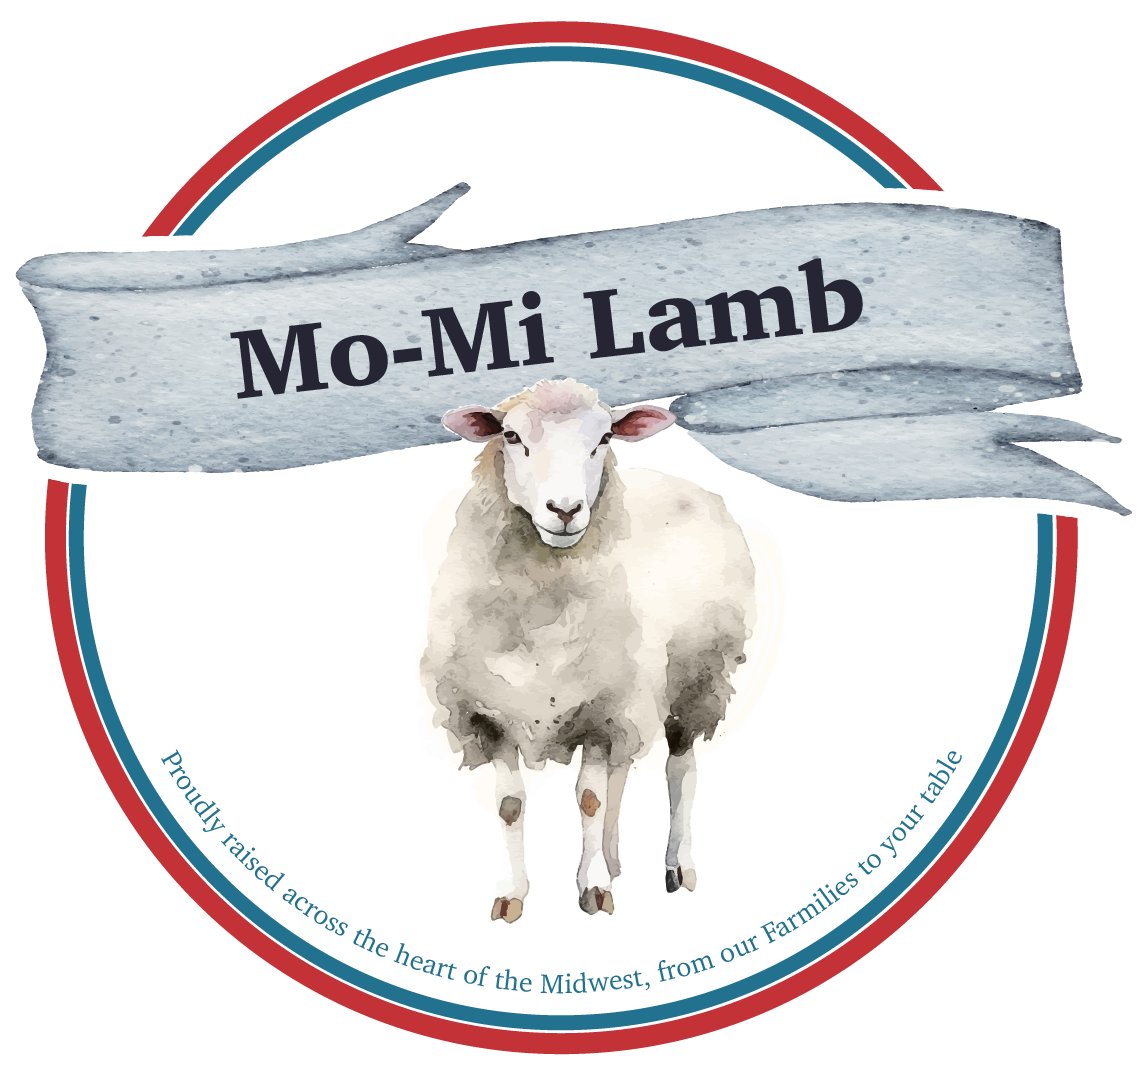 Mo-Mi Lamb - 100% Grass-fed and Antibiotic Free